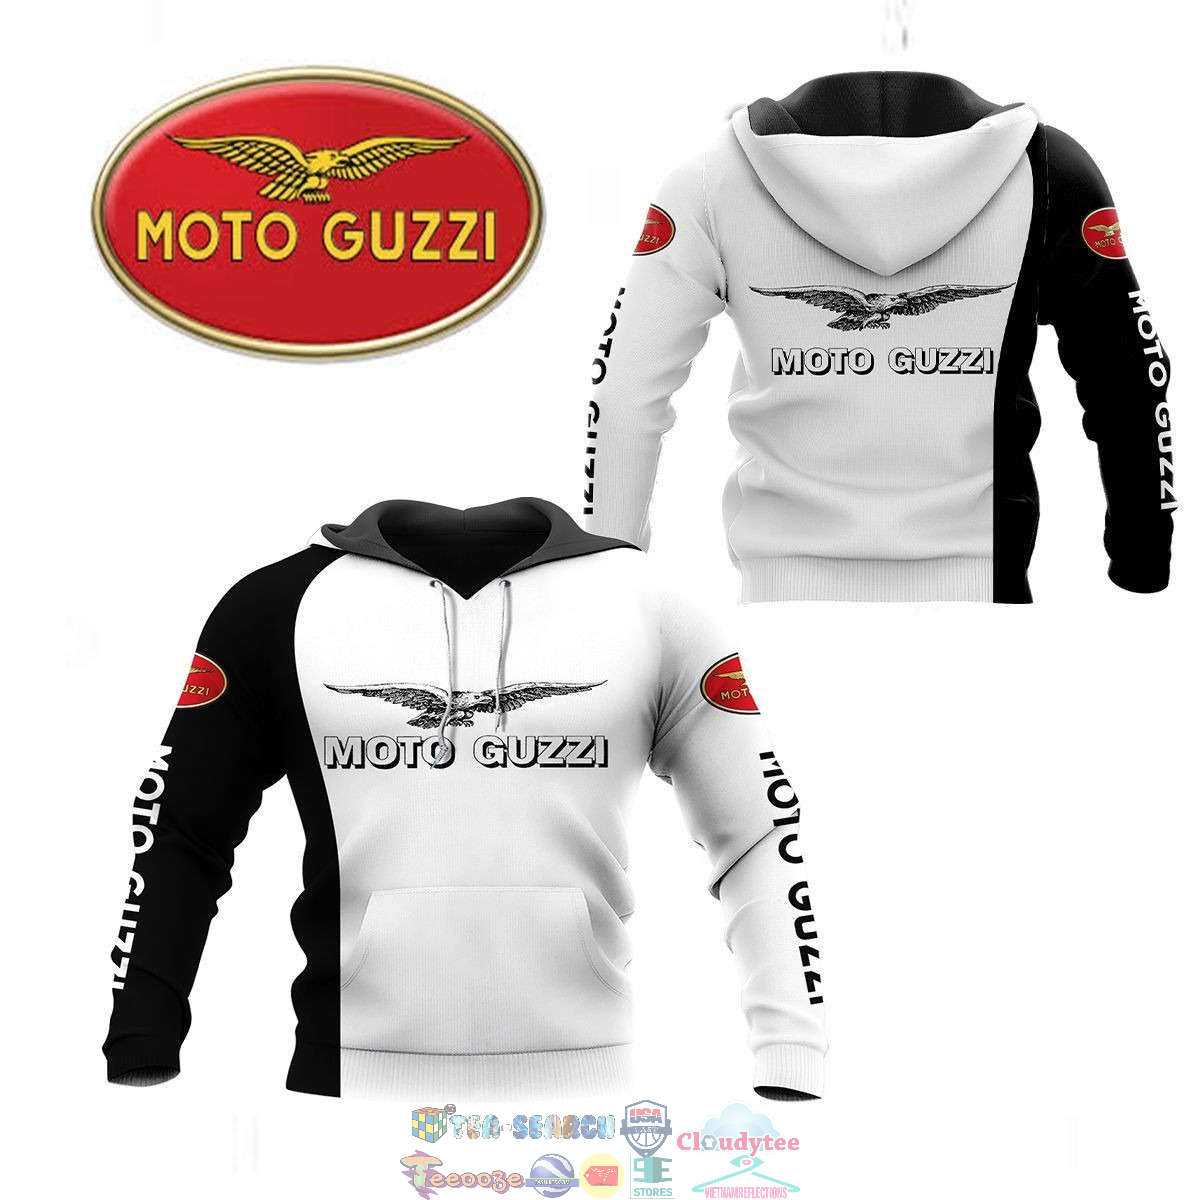 Moto Guzzi ver 9 3D hoodie and t-shirt – Saleoff